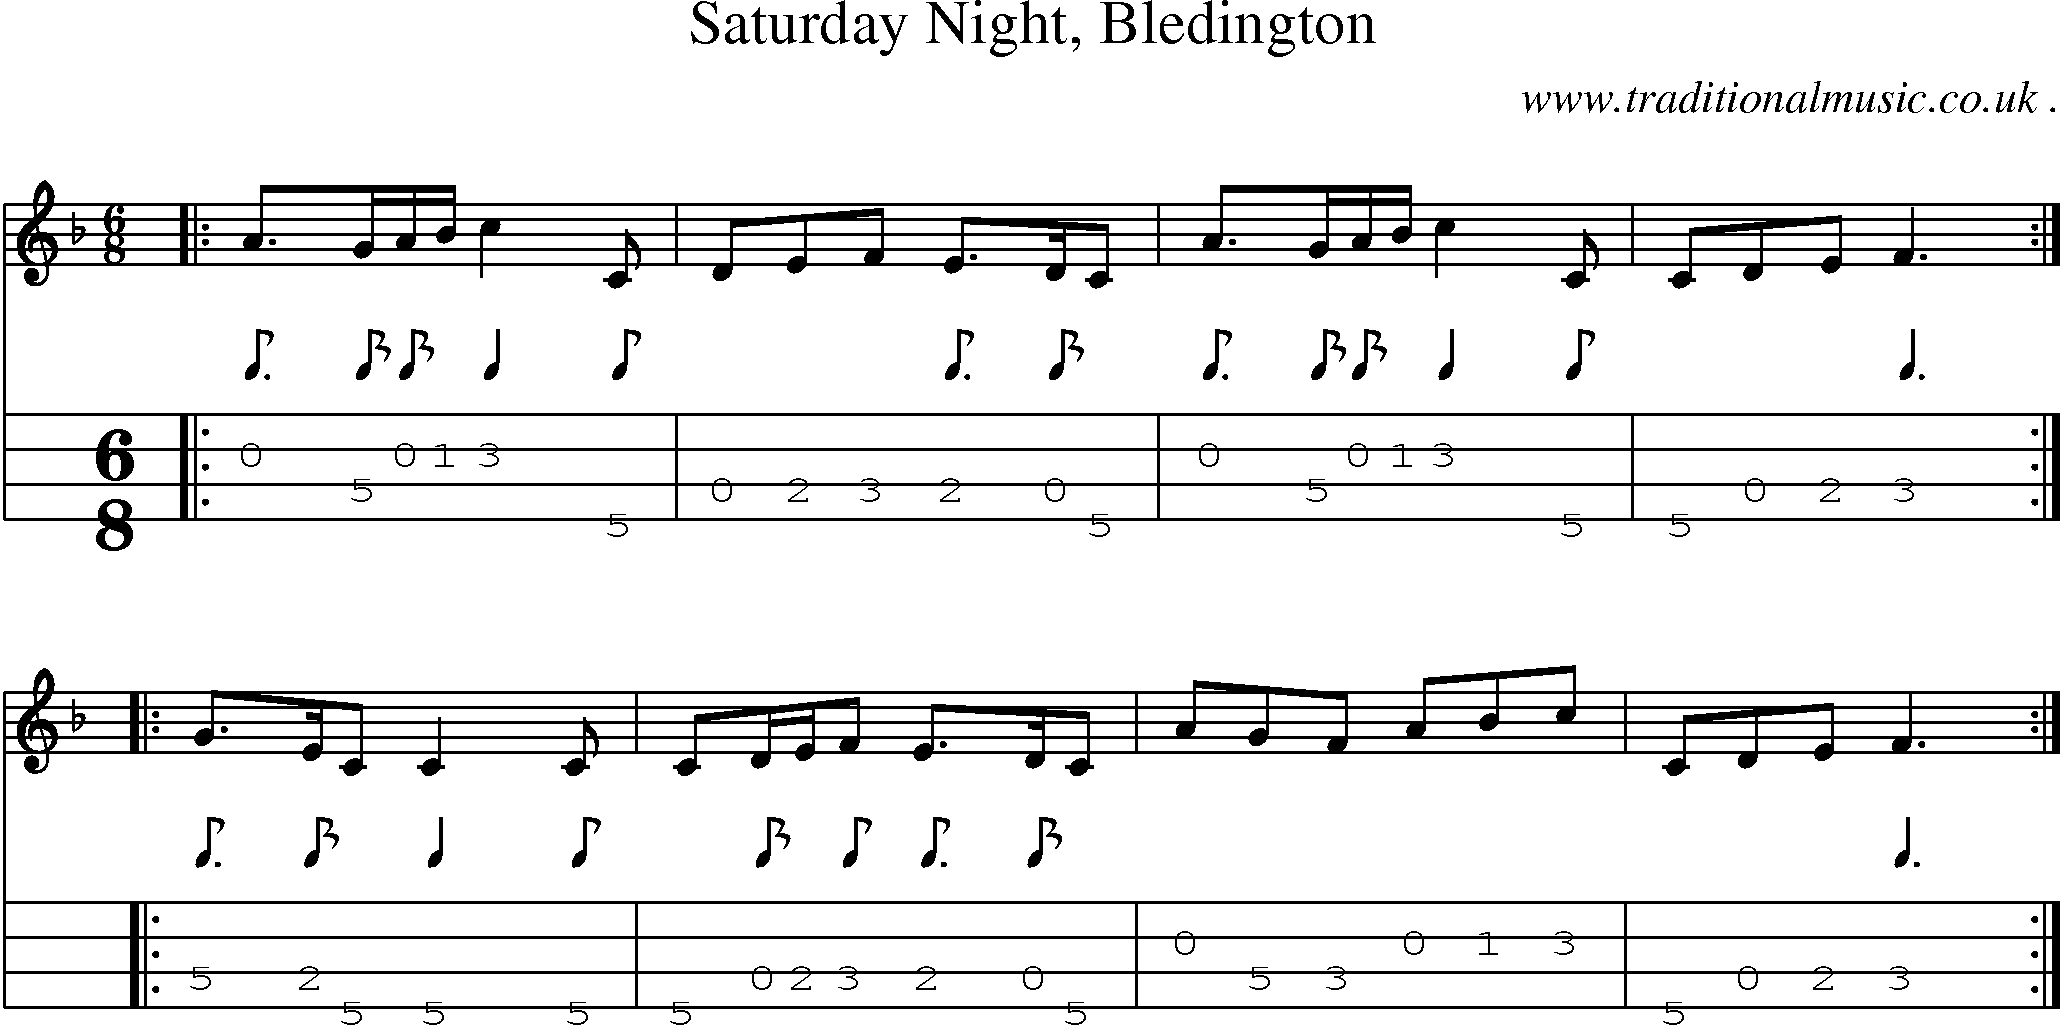 Sheet-Music and Mandolin Tabs for Saturday Night Bledington